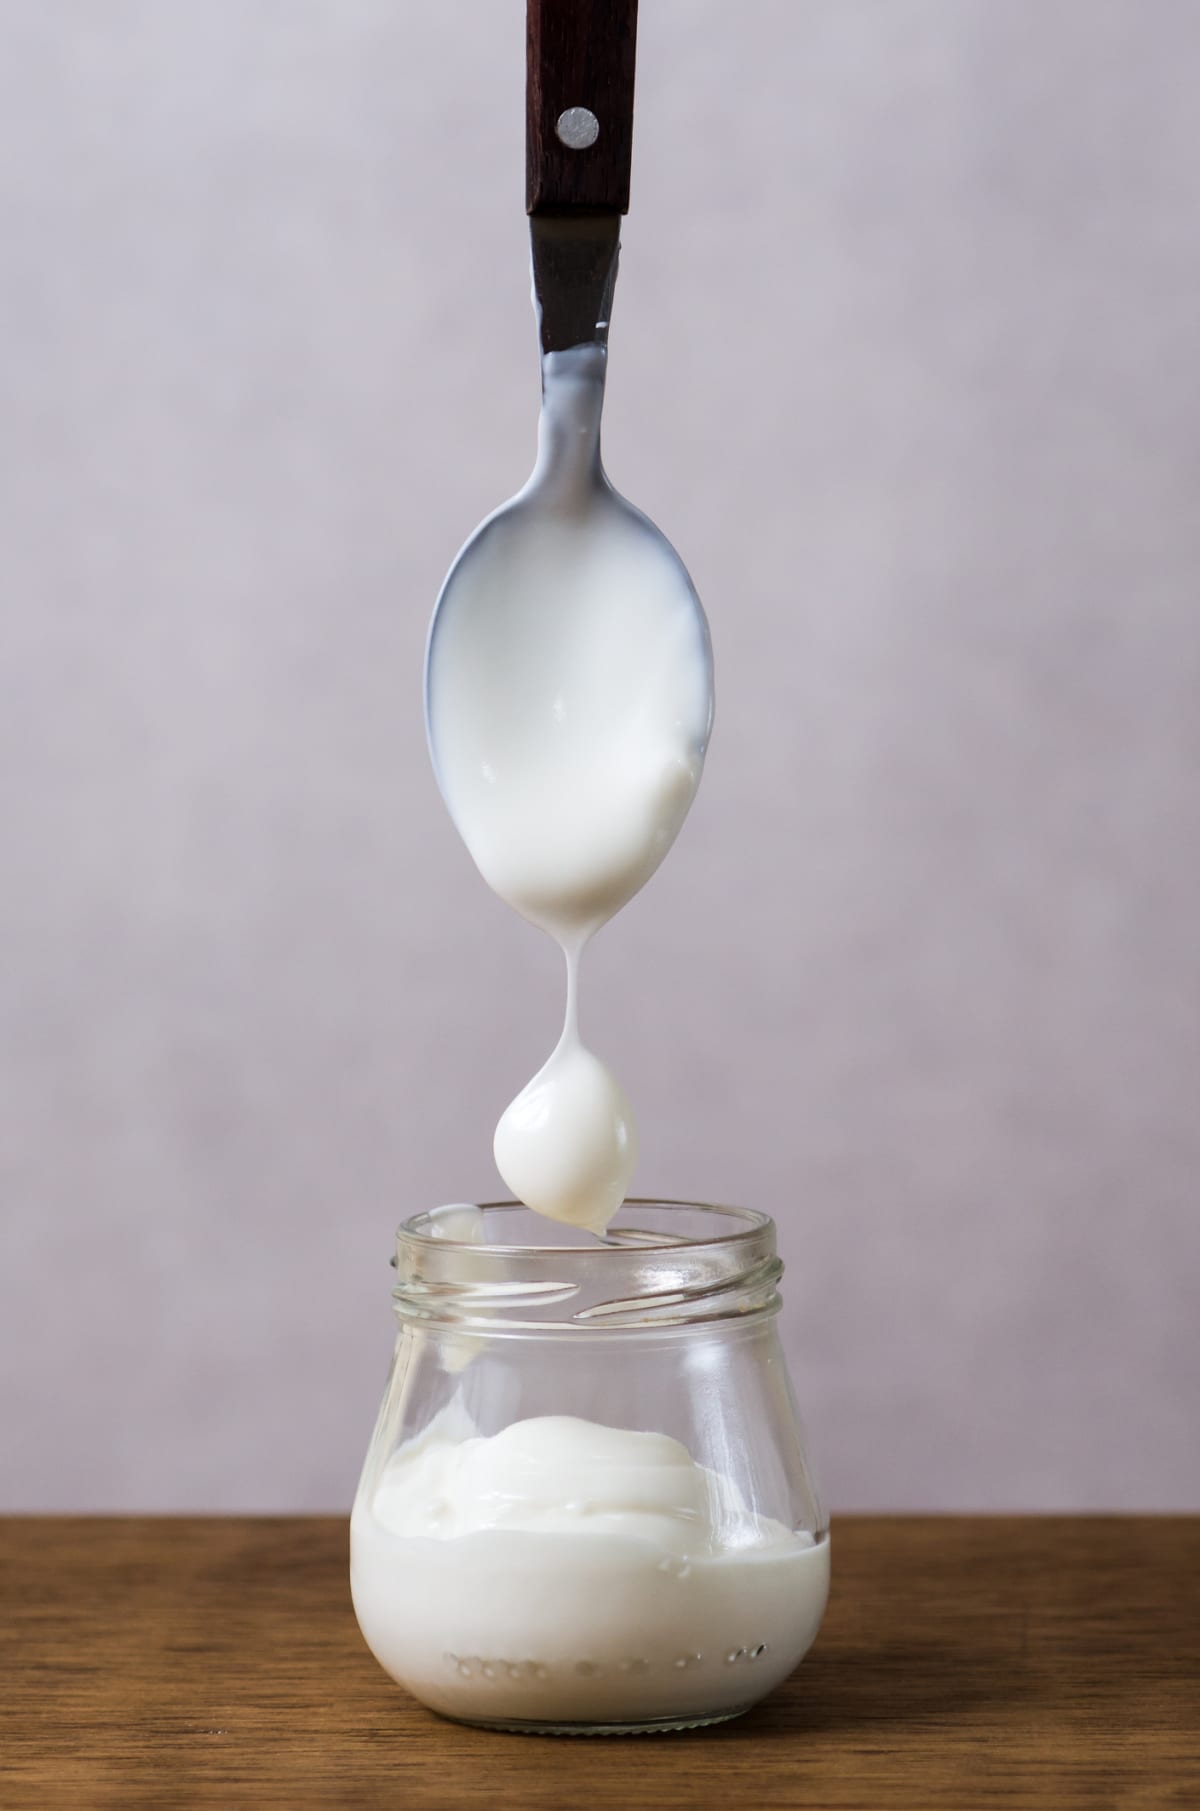 Spoon dropping dollop of yogurt into jar